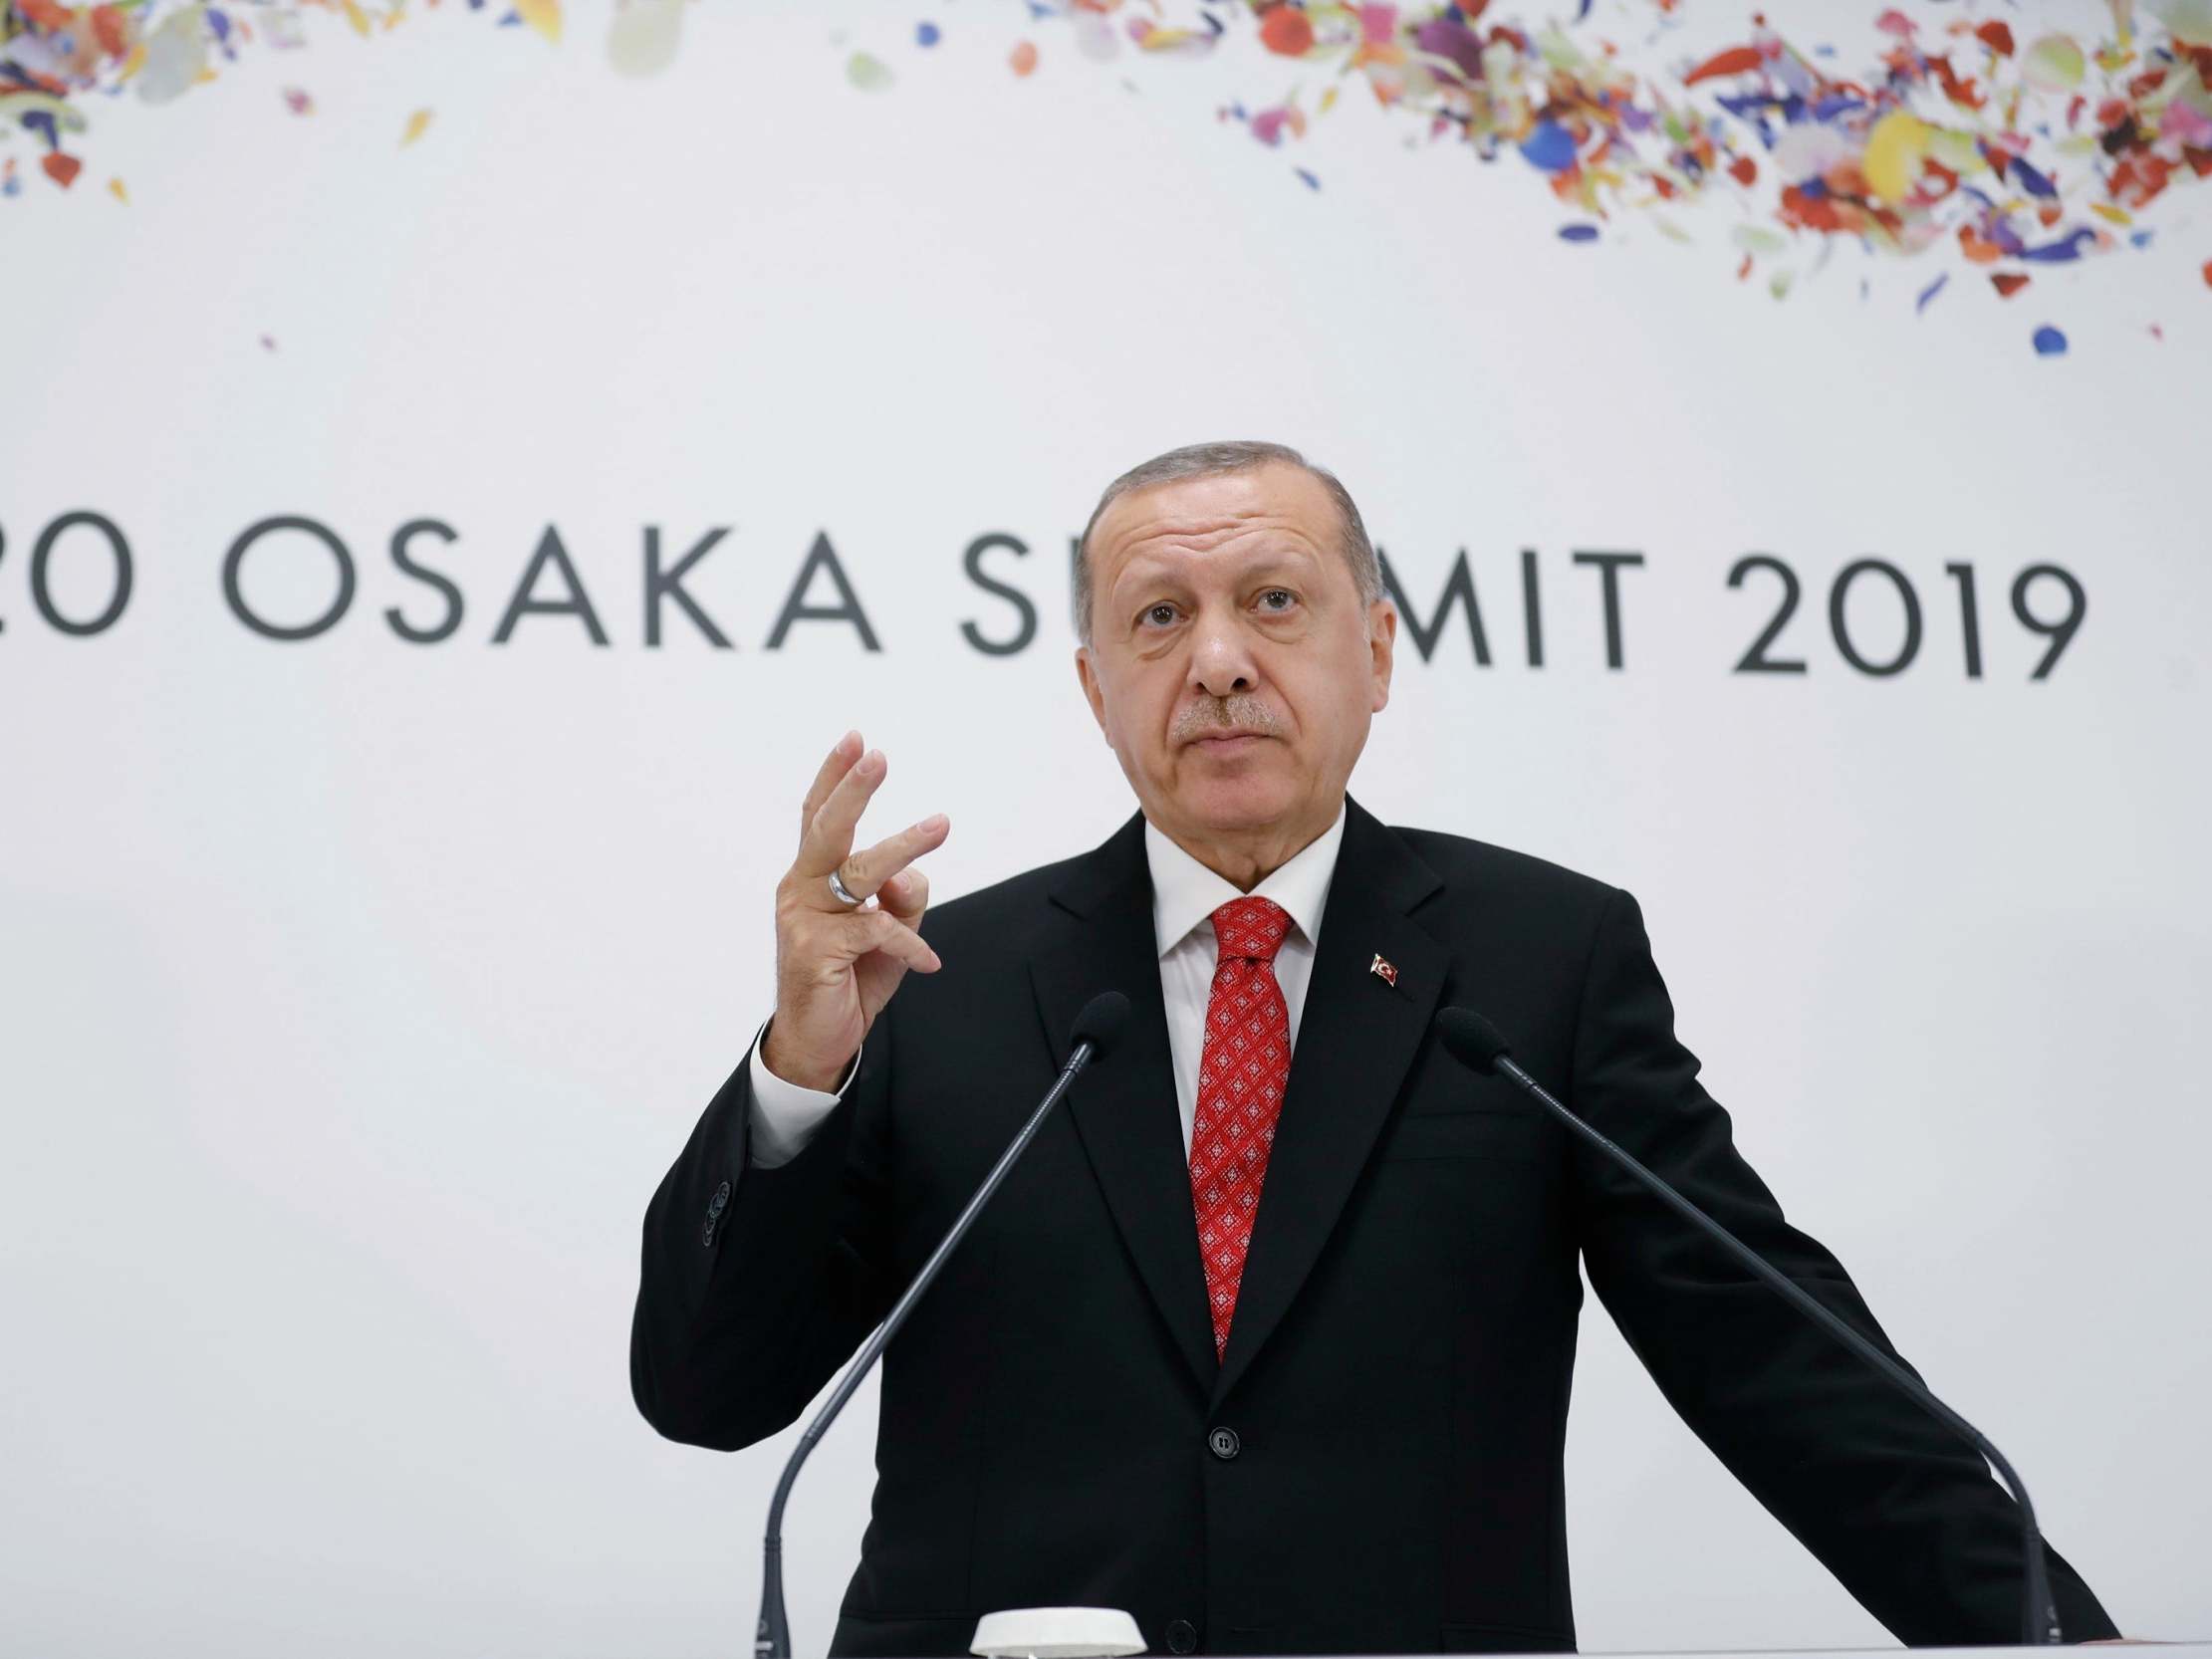 Recep Tayyip Erdogan, the president of Turkey, speaking at the G20 summit in Osaka